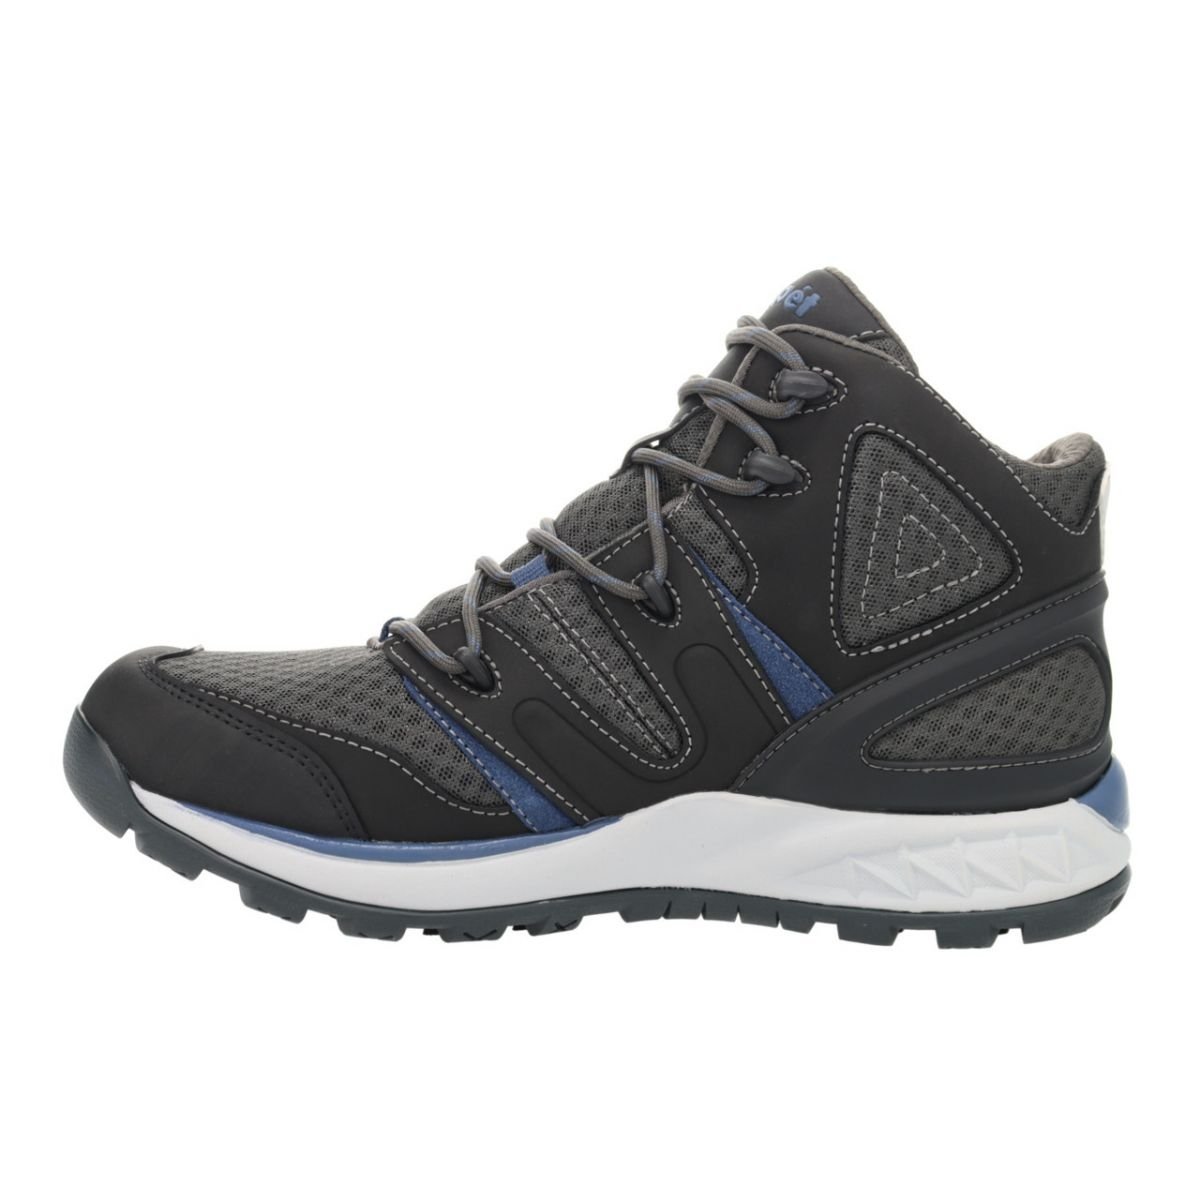 Propet Men's Veymont Waterproof Hiking Boot Grey/Blue - MOA022SGRB GREY/BLUE - GREY/BLUE, 8.5 XX-Wide